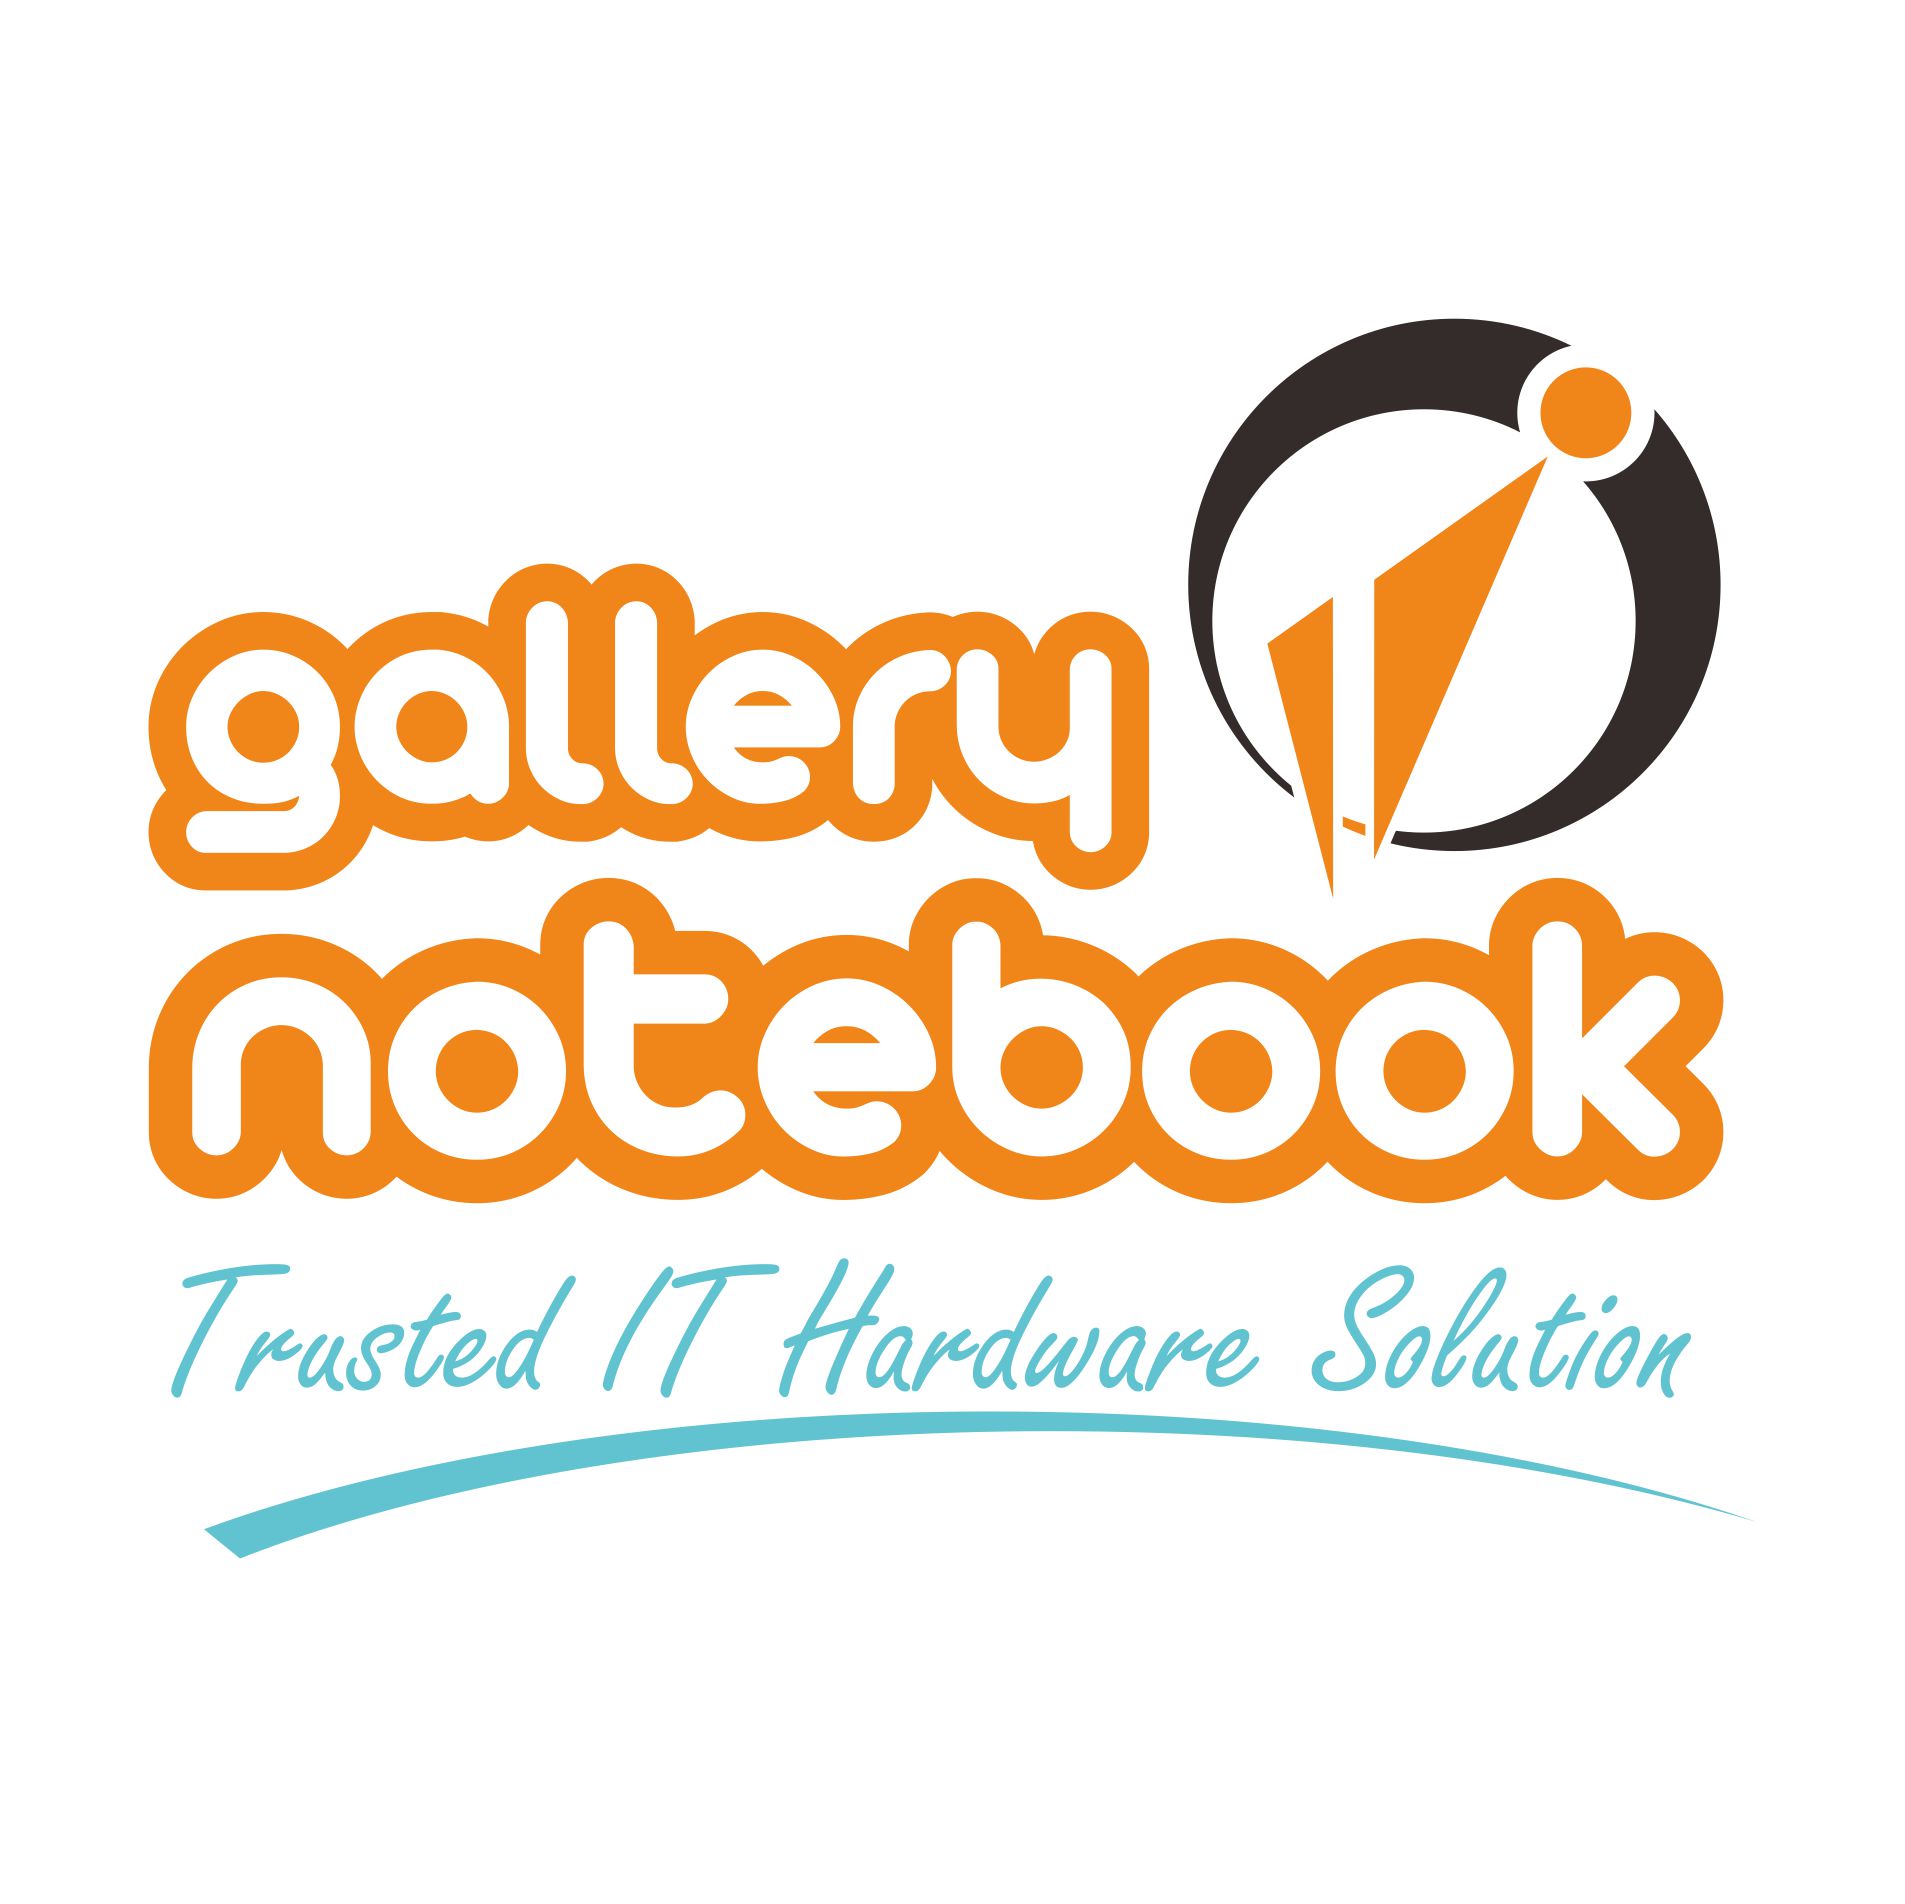 Gallery Notebook